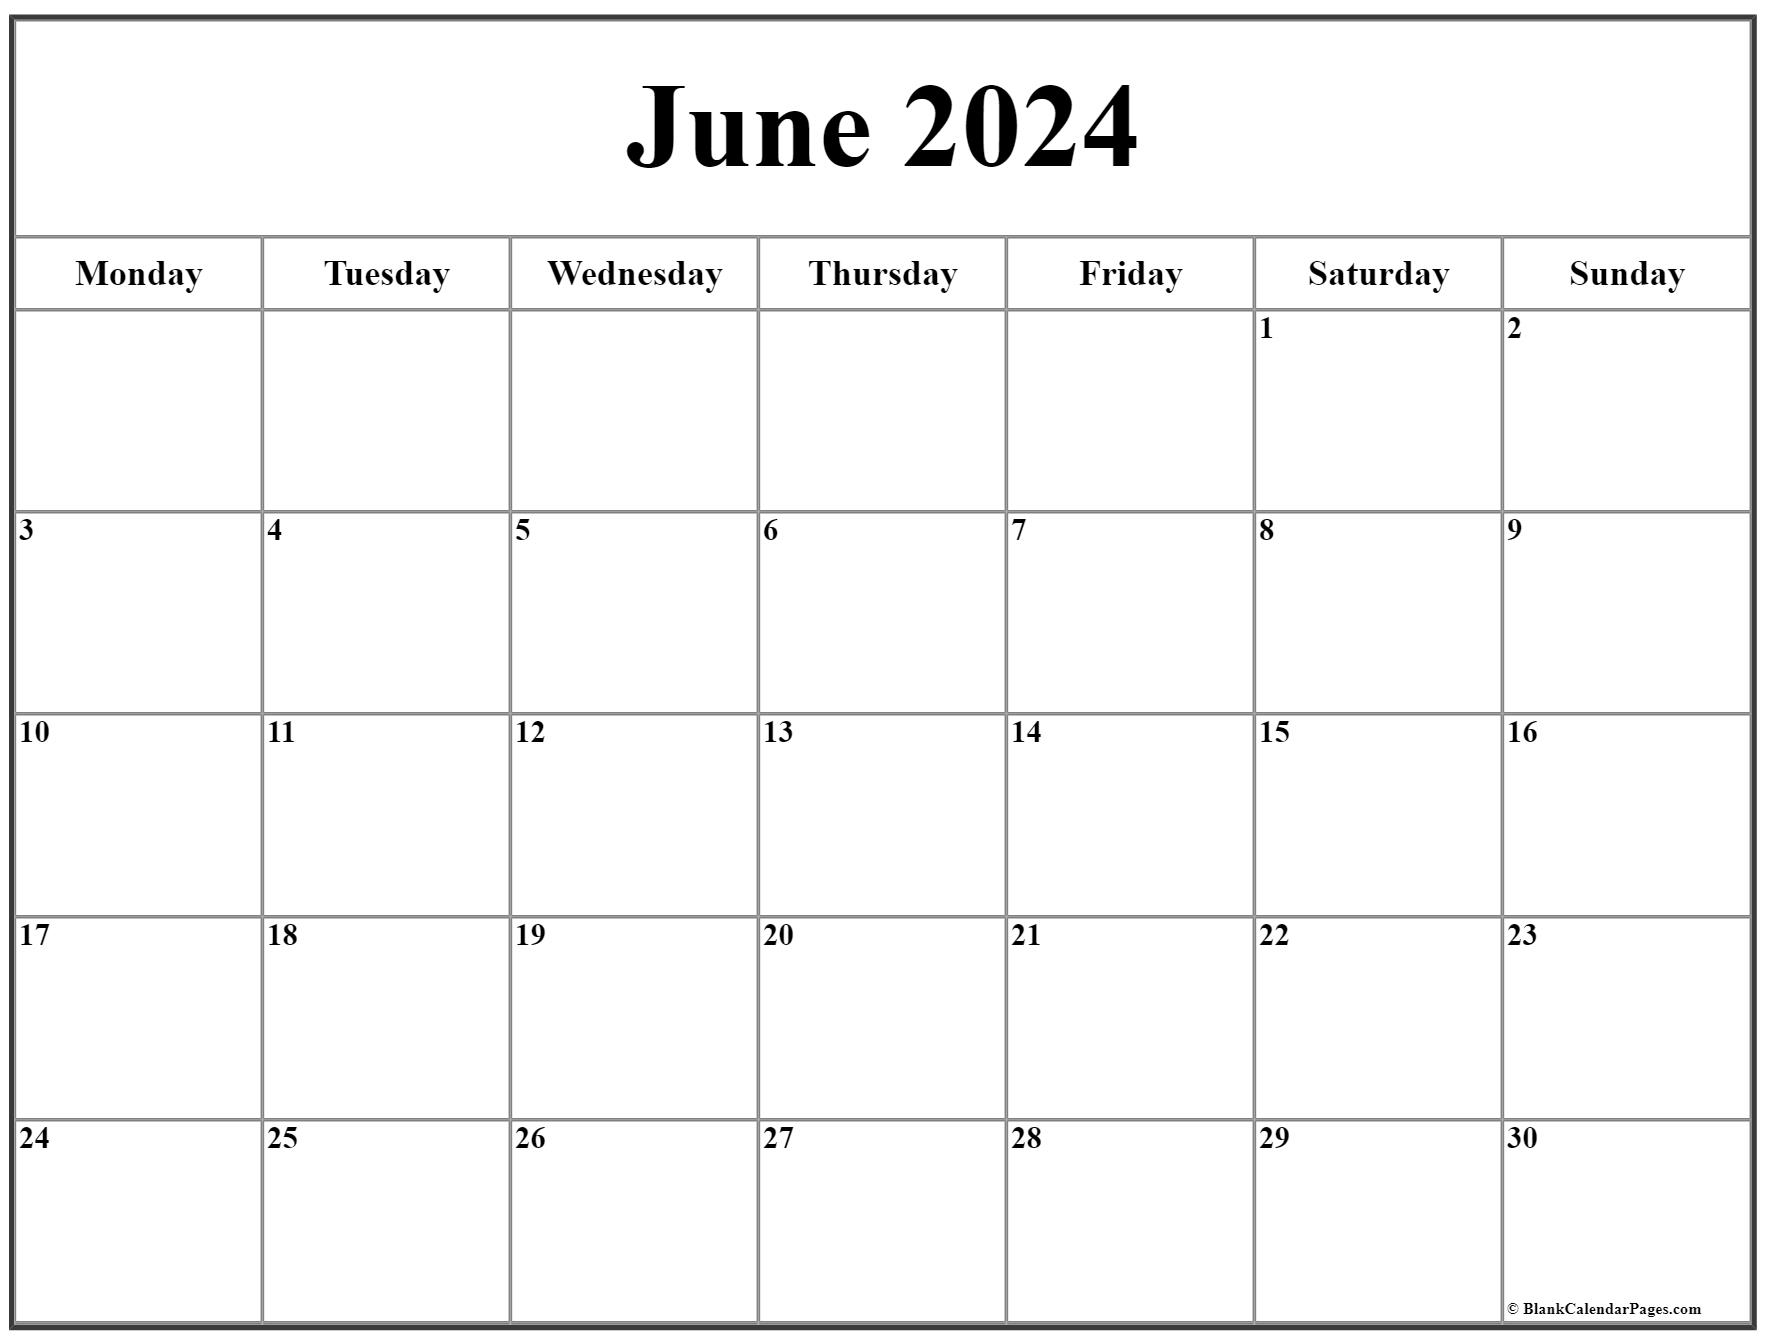 june-2020-monday-calendar-monday-to-sunday